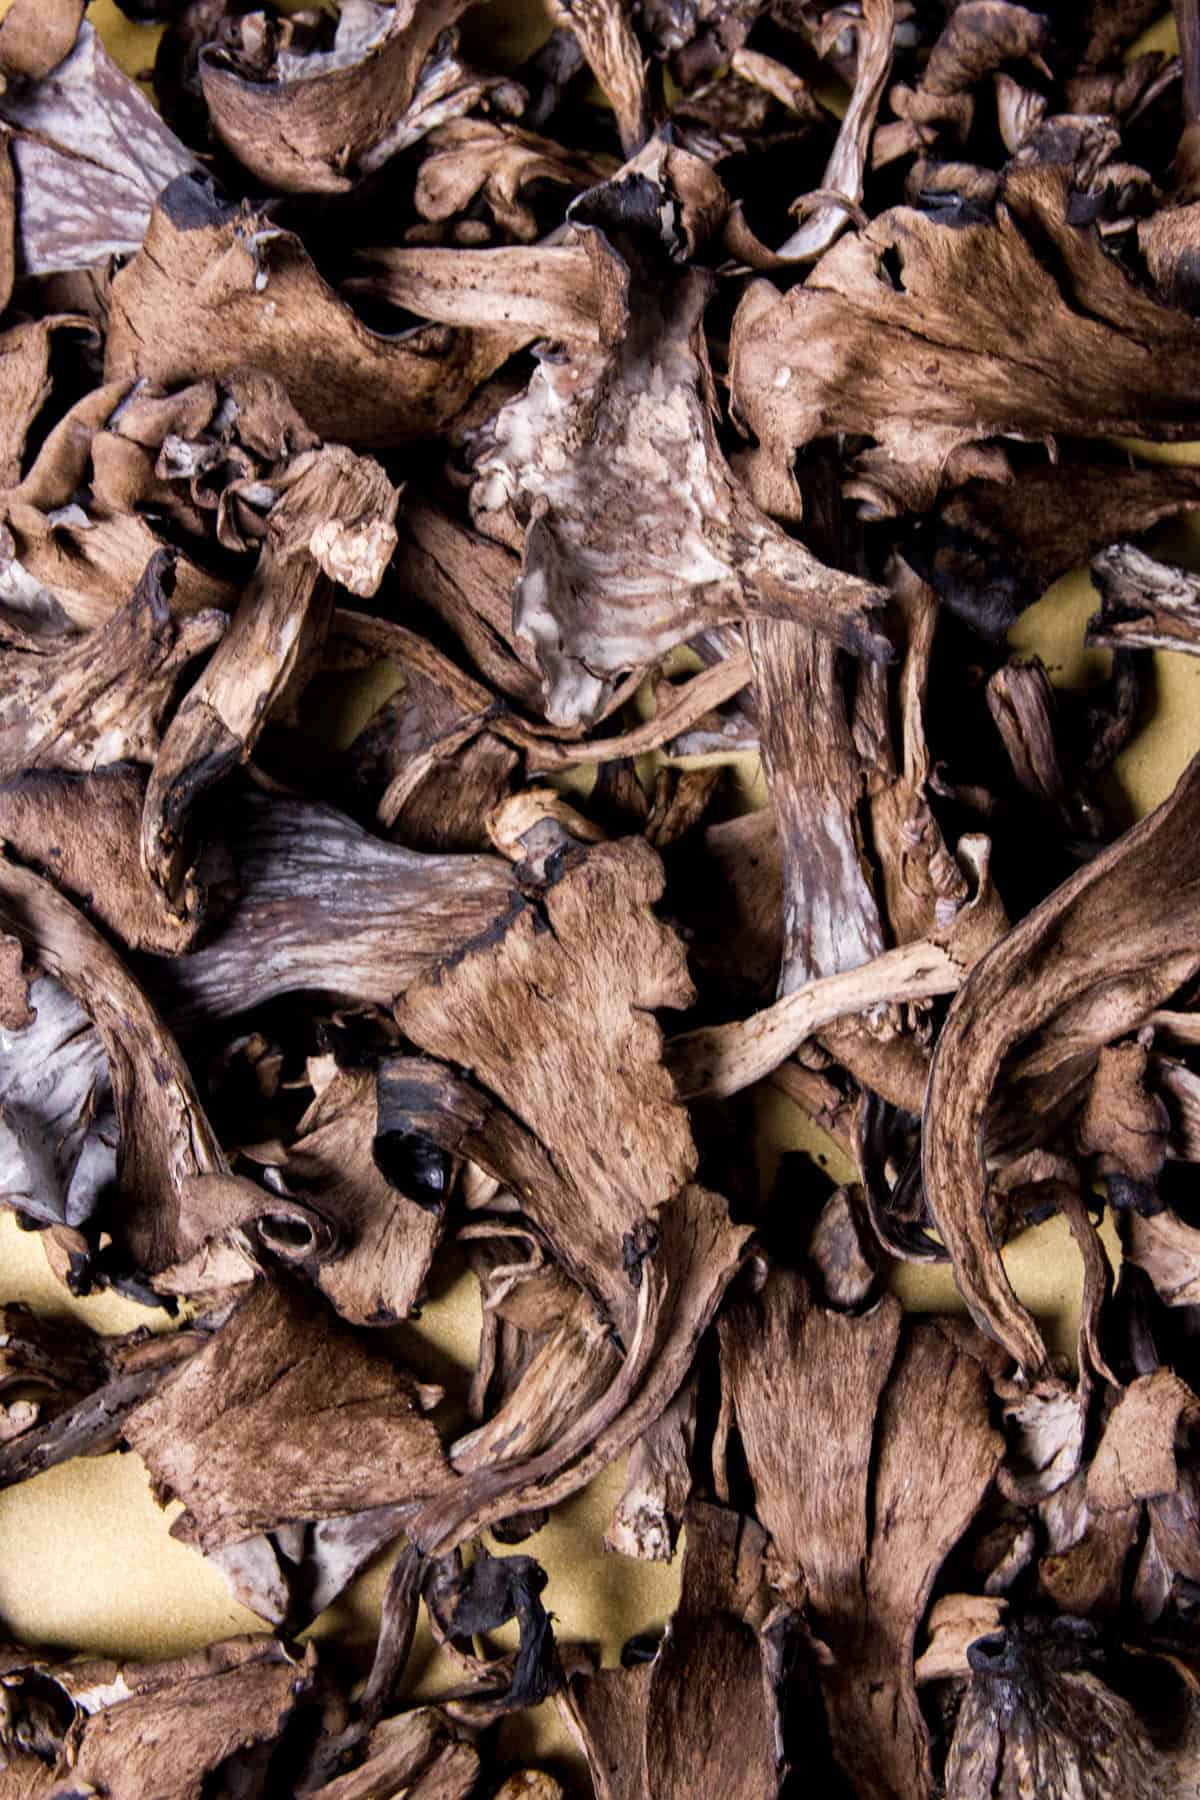 A close up of raw black trumpet mushrooms.